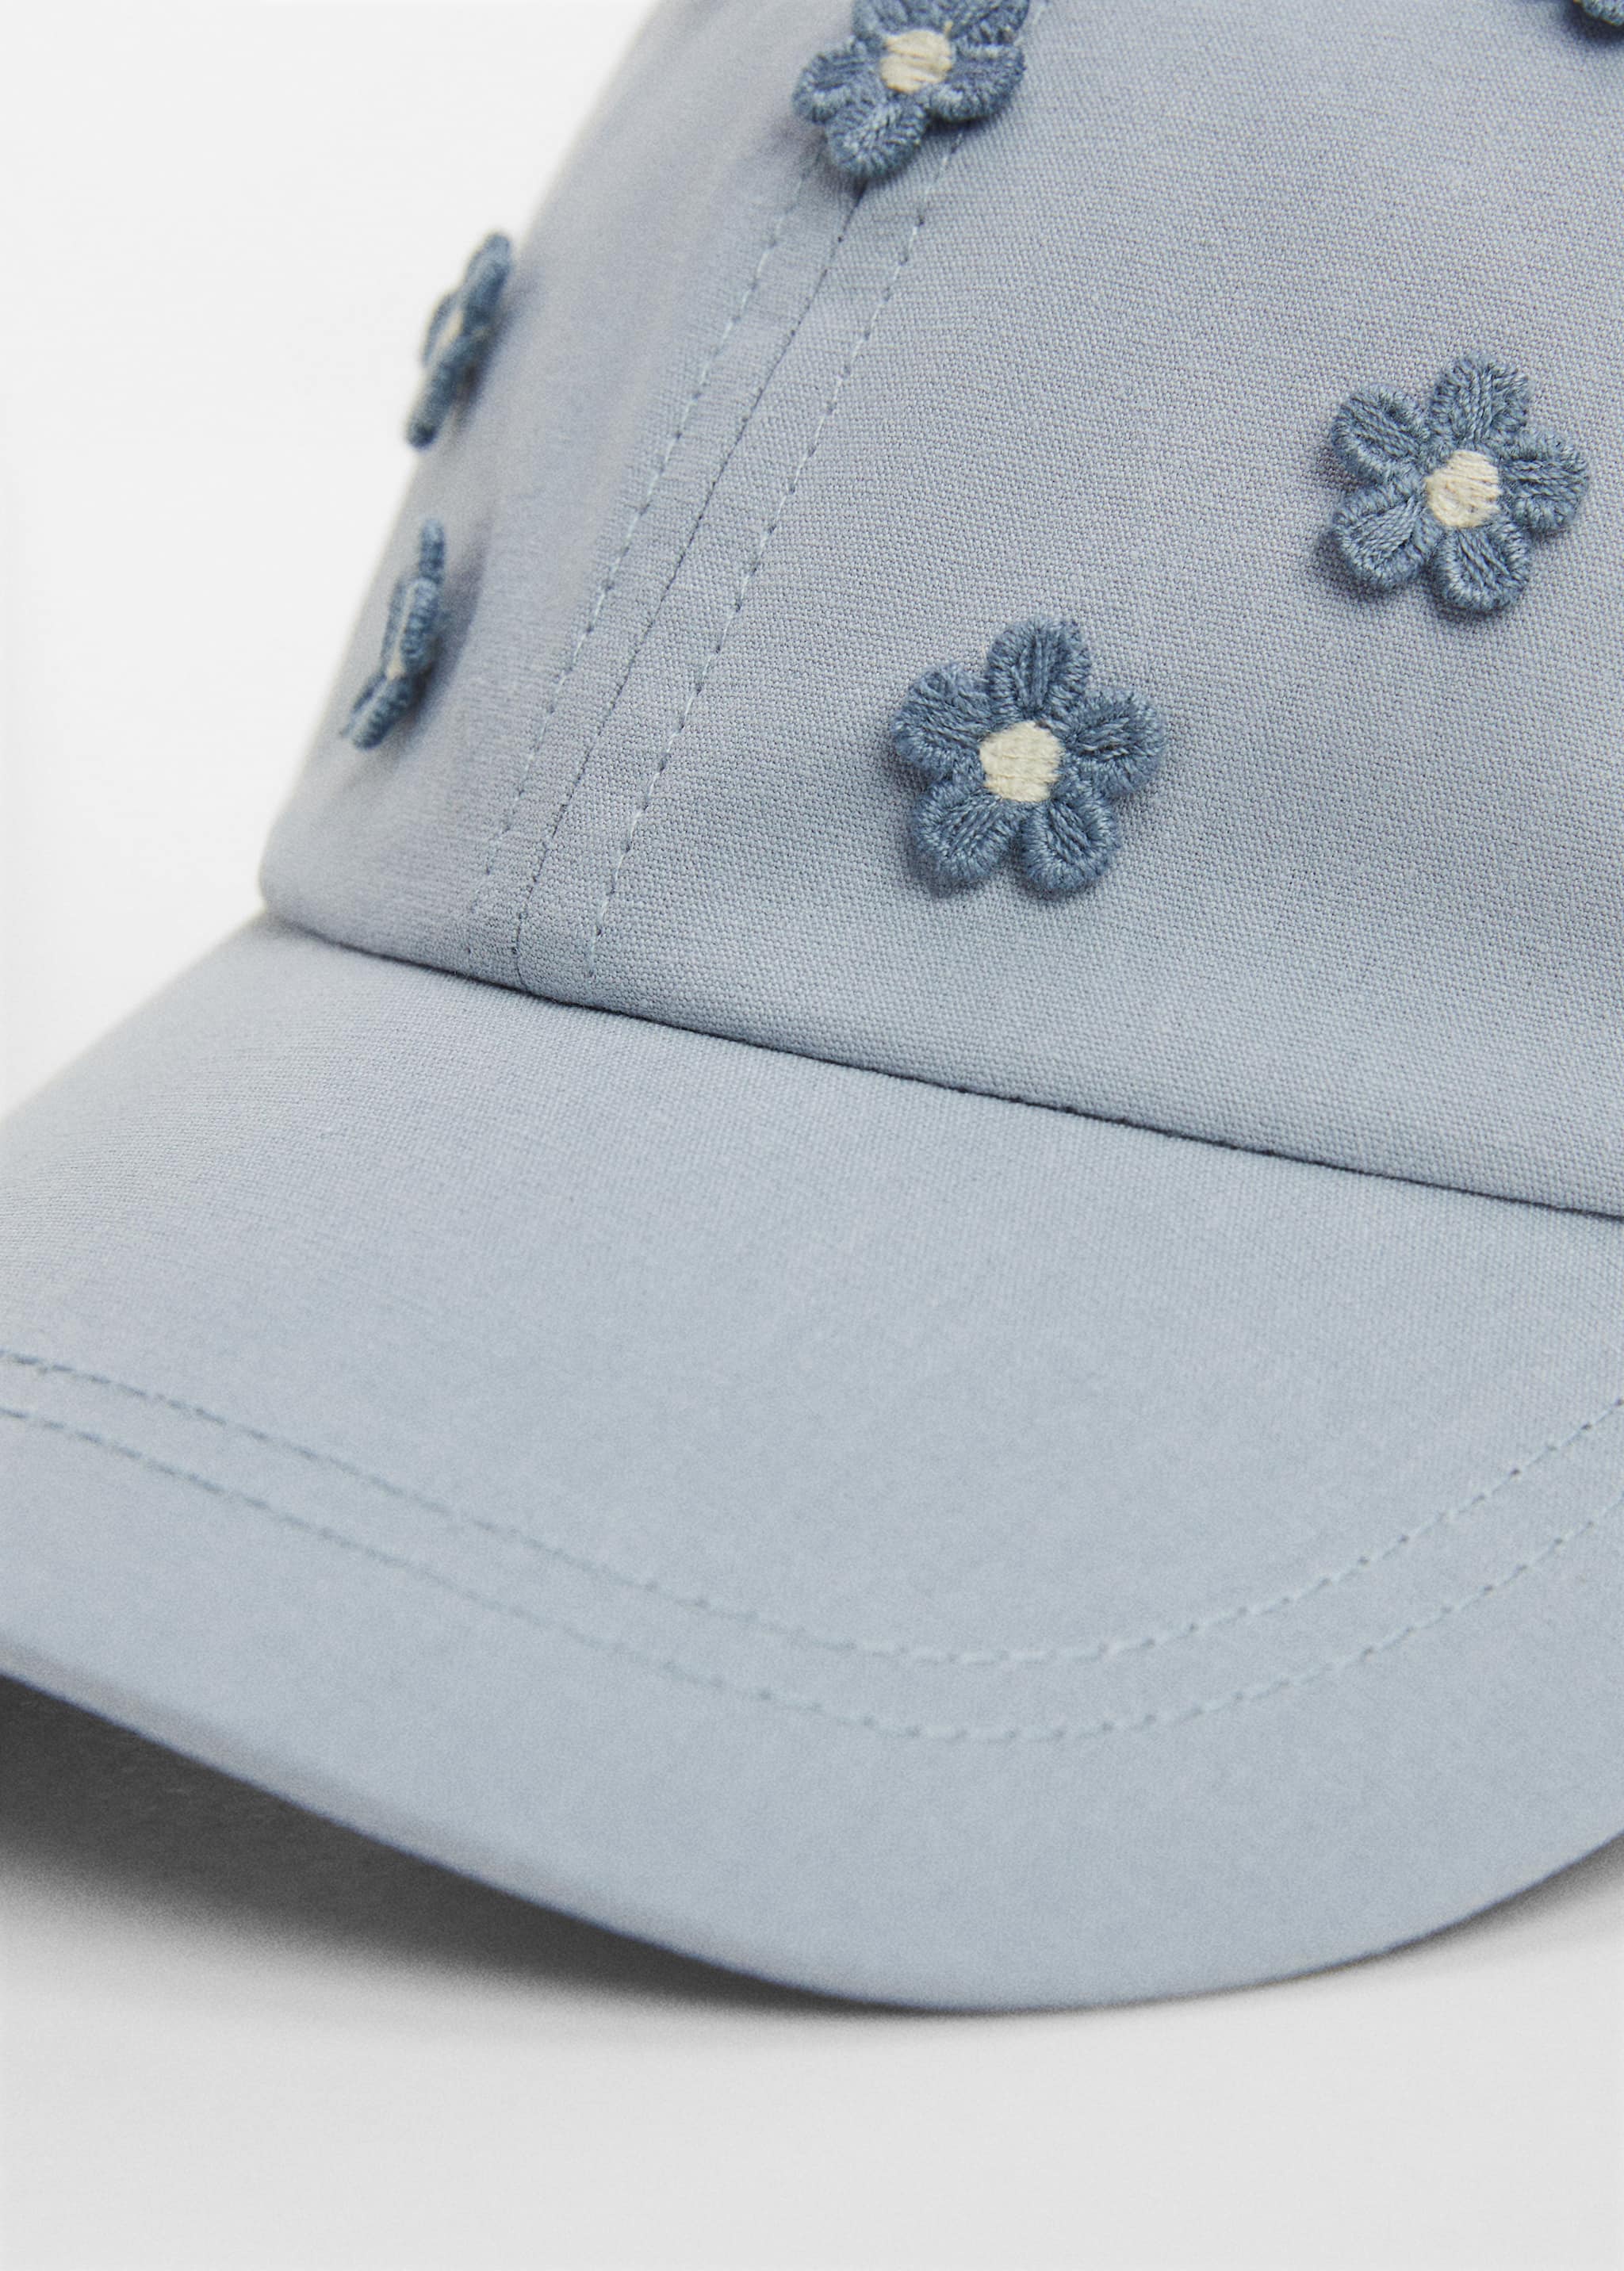 Floral cap - Details of the article 2